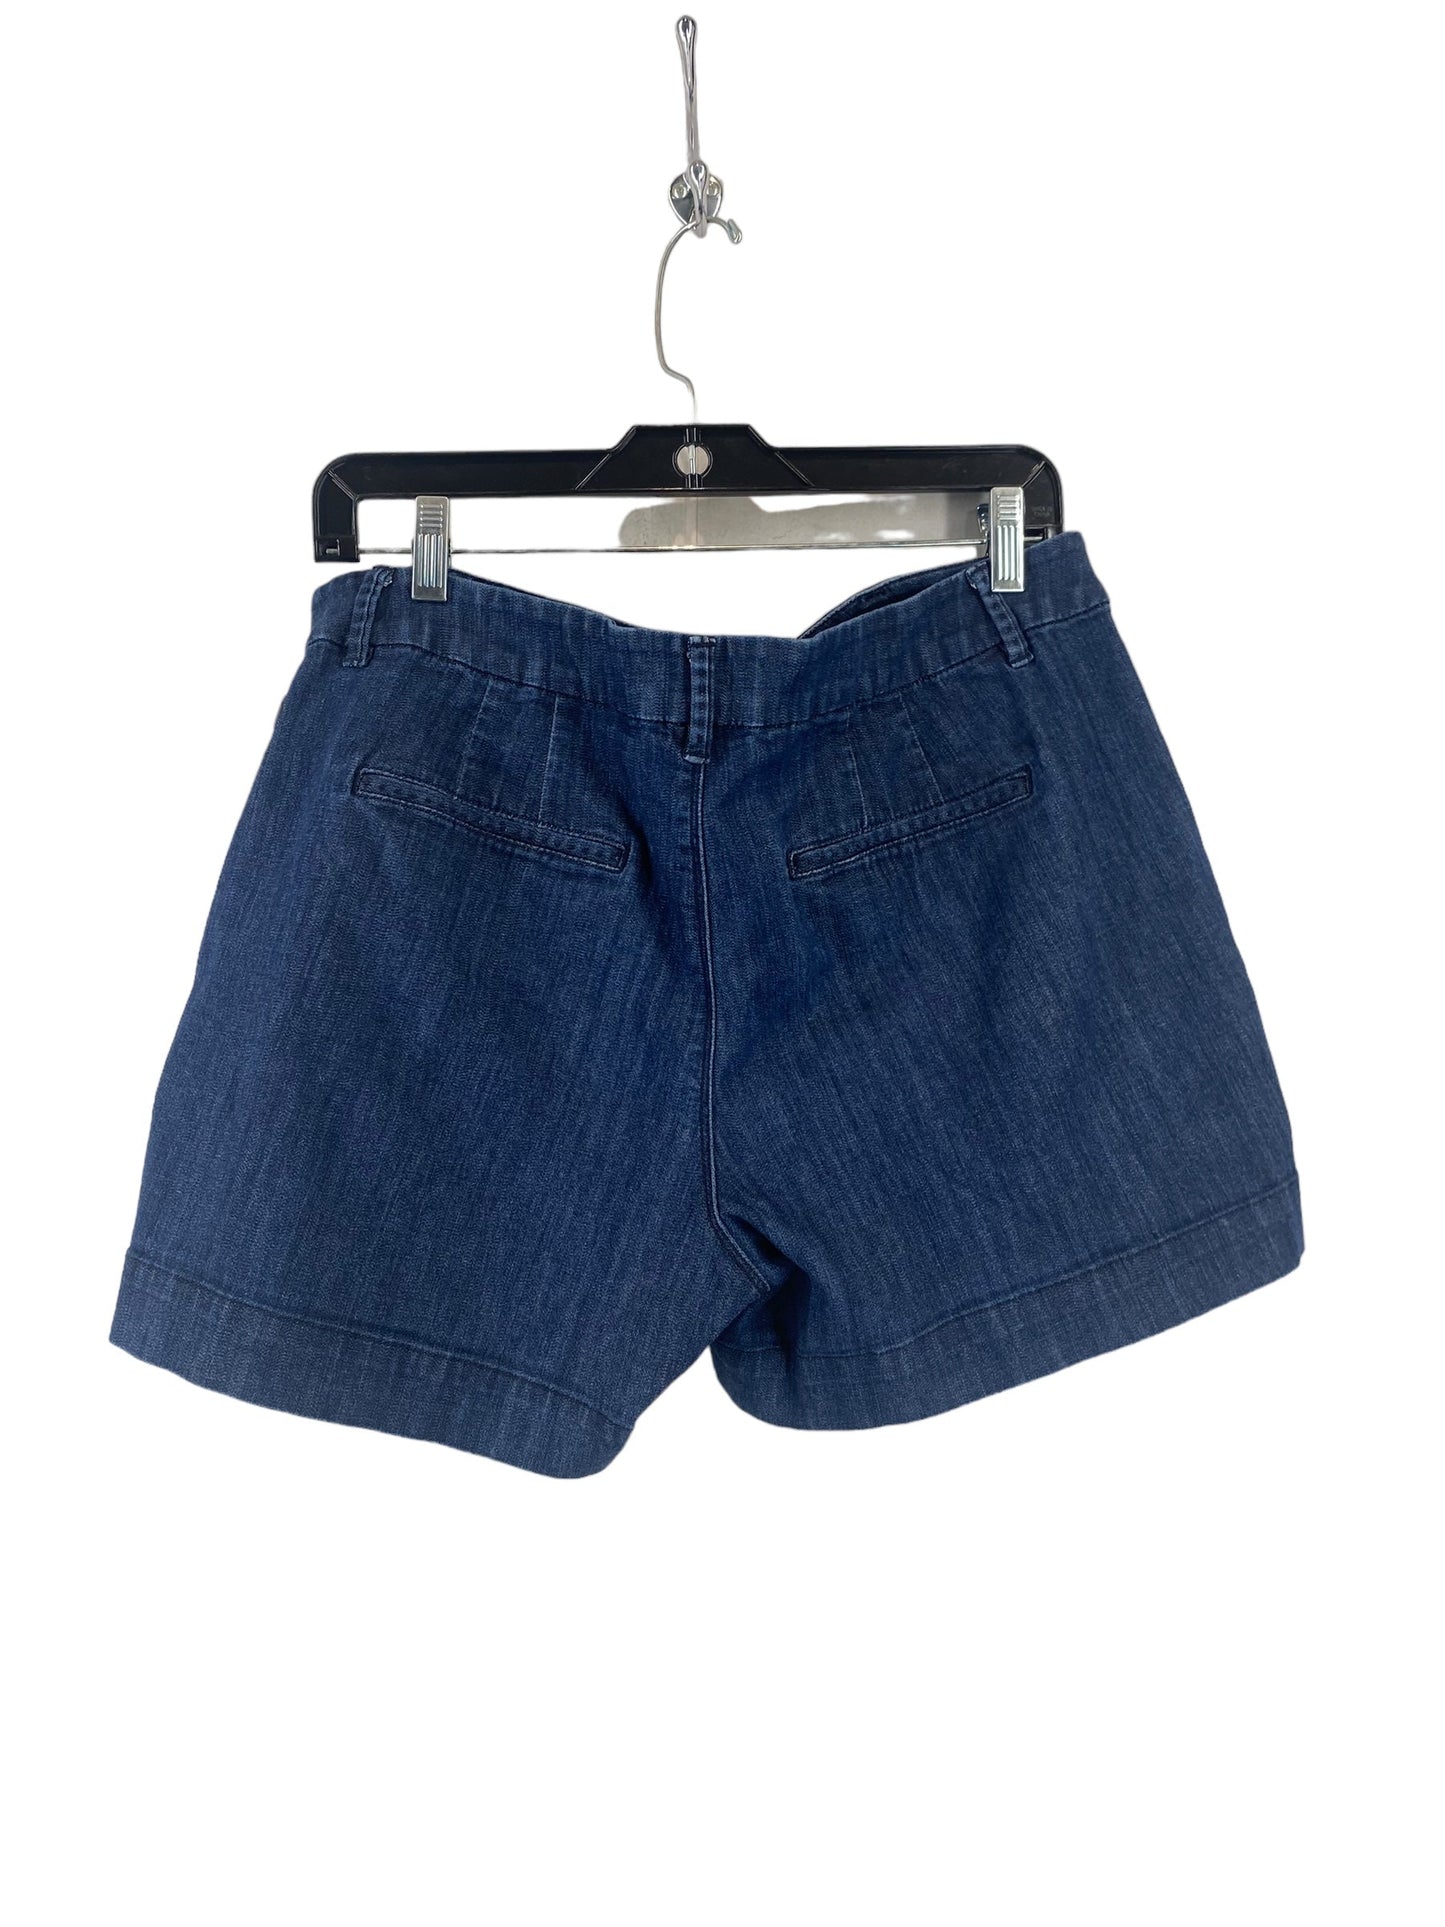 Blue Denim Shorts White House Black Market, Size 12